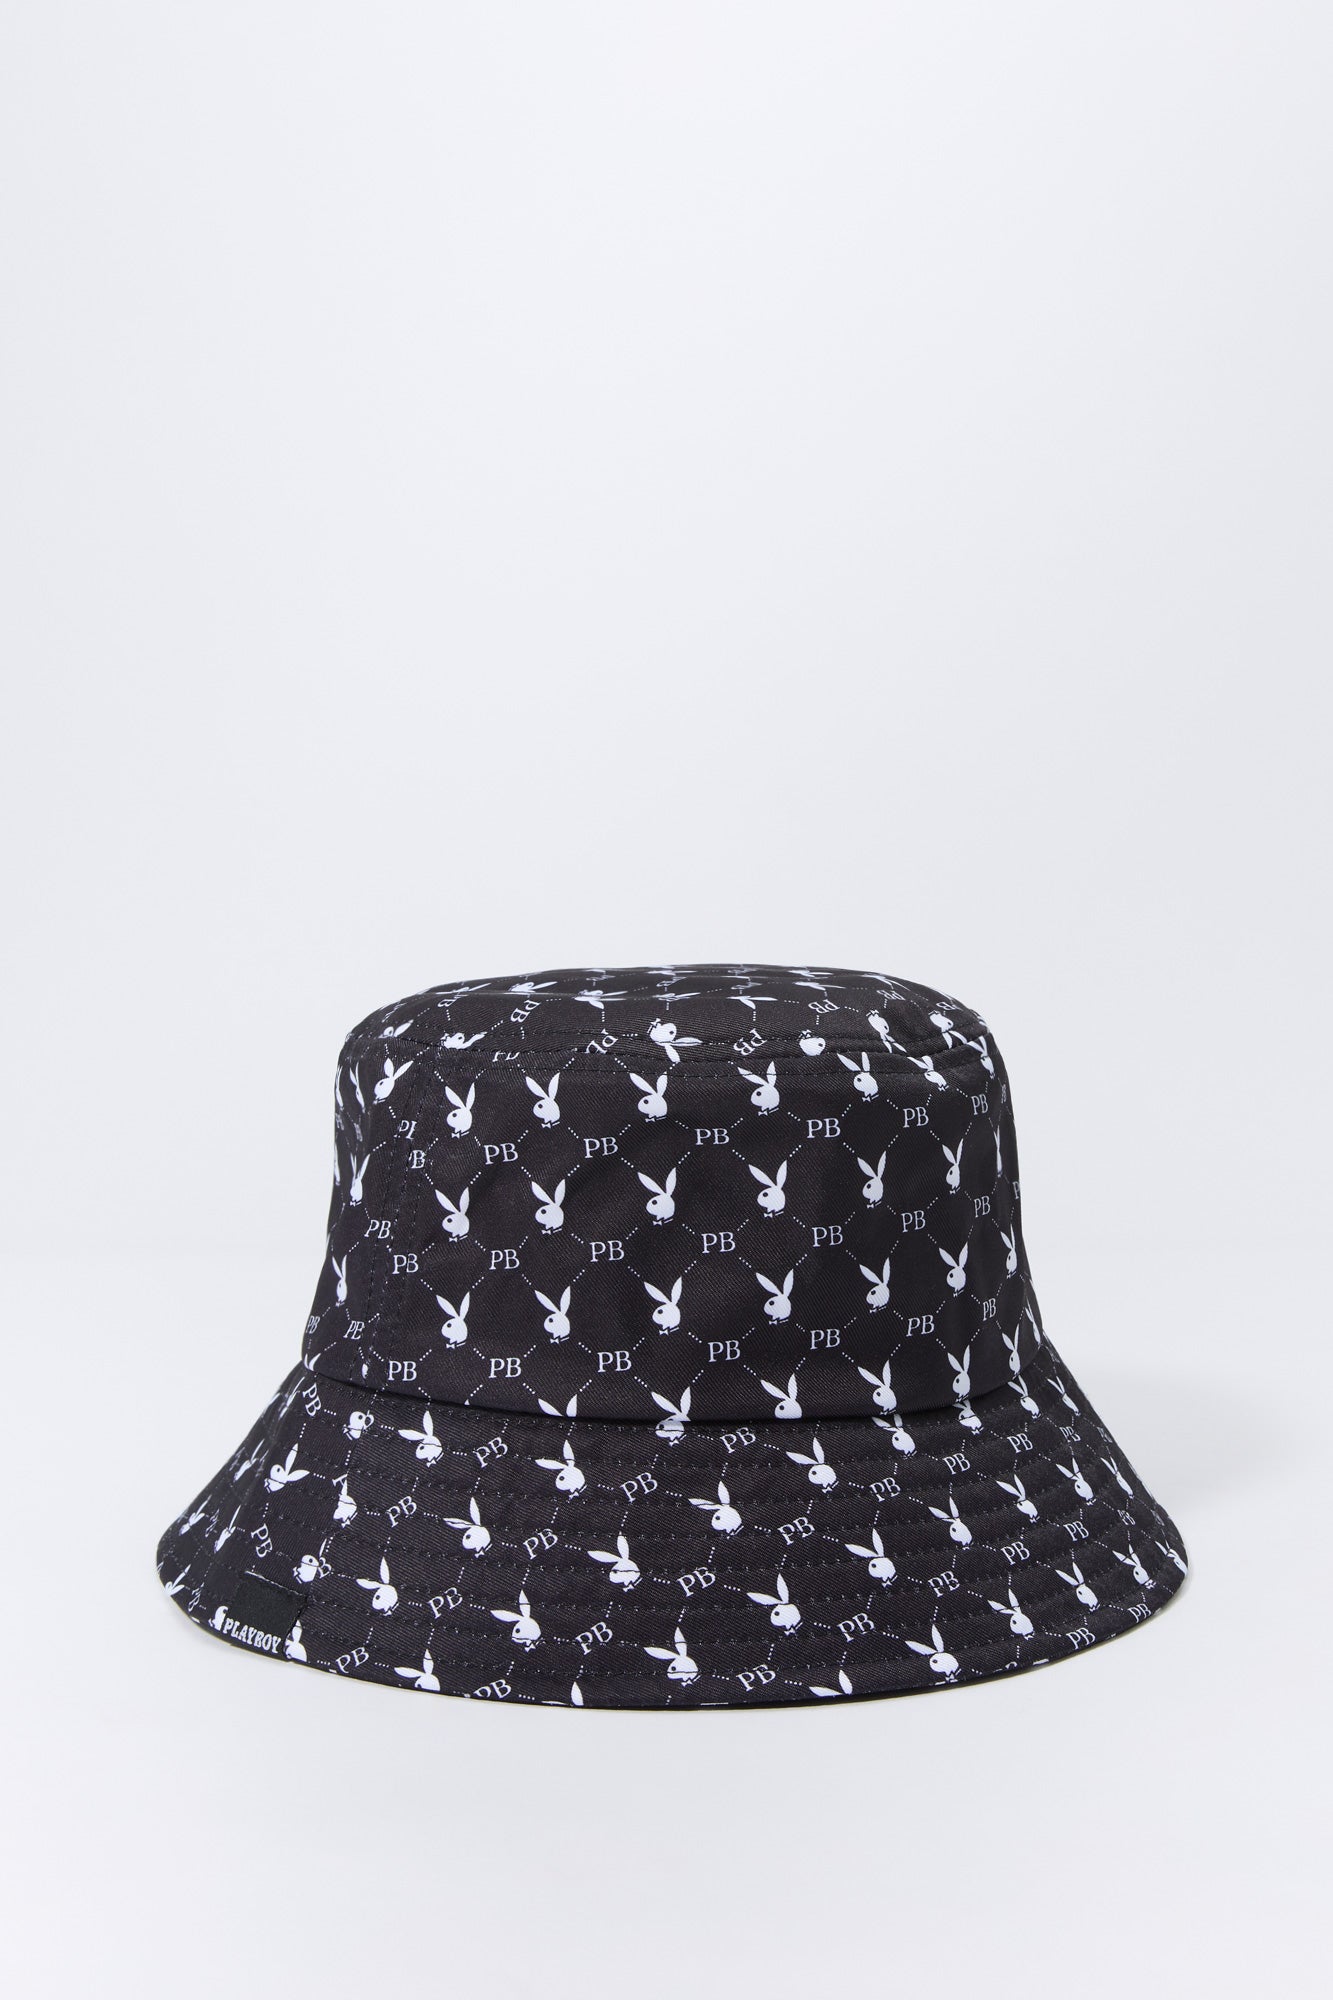 Playboy Print Bucket Hat